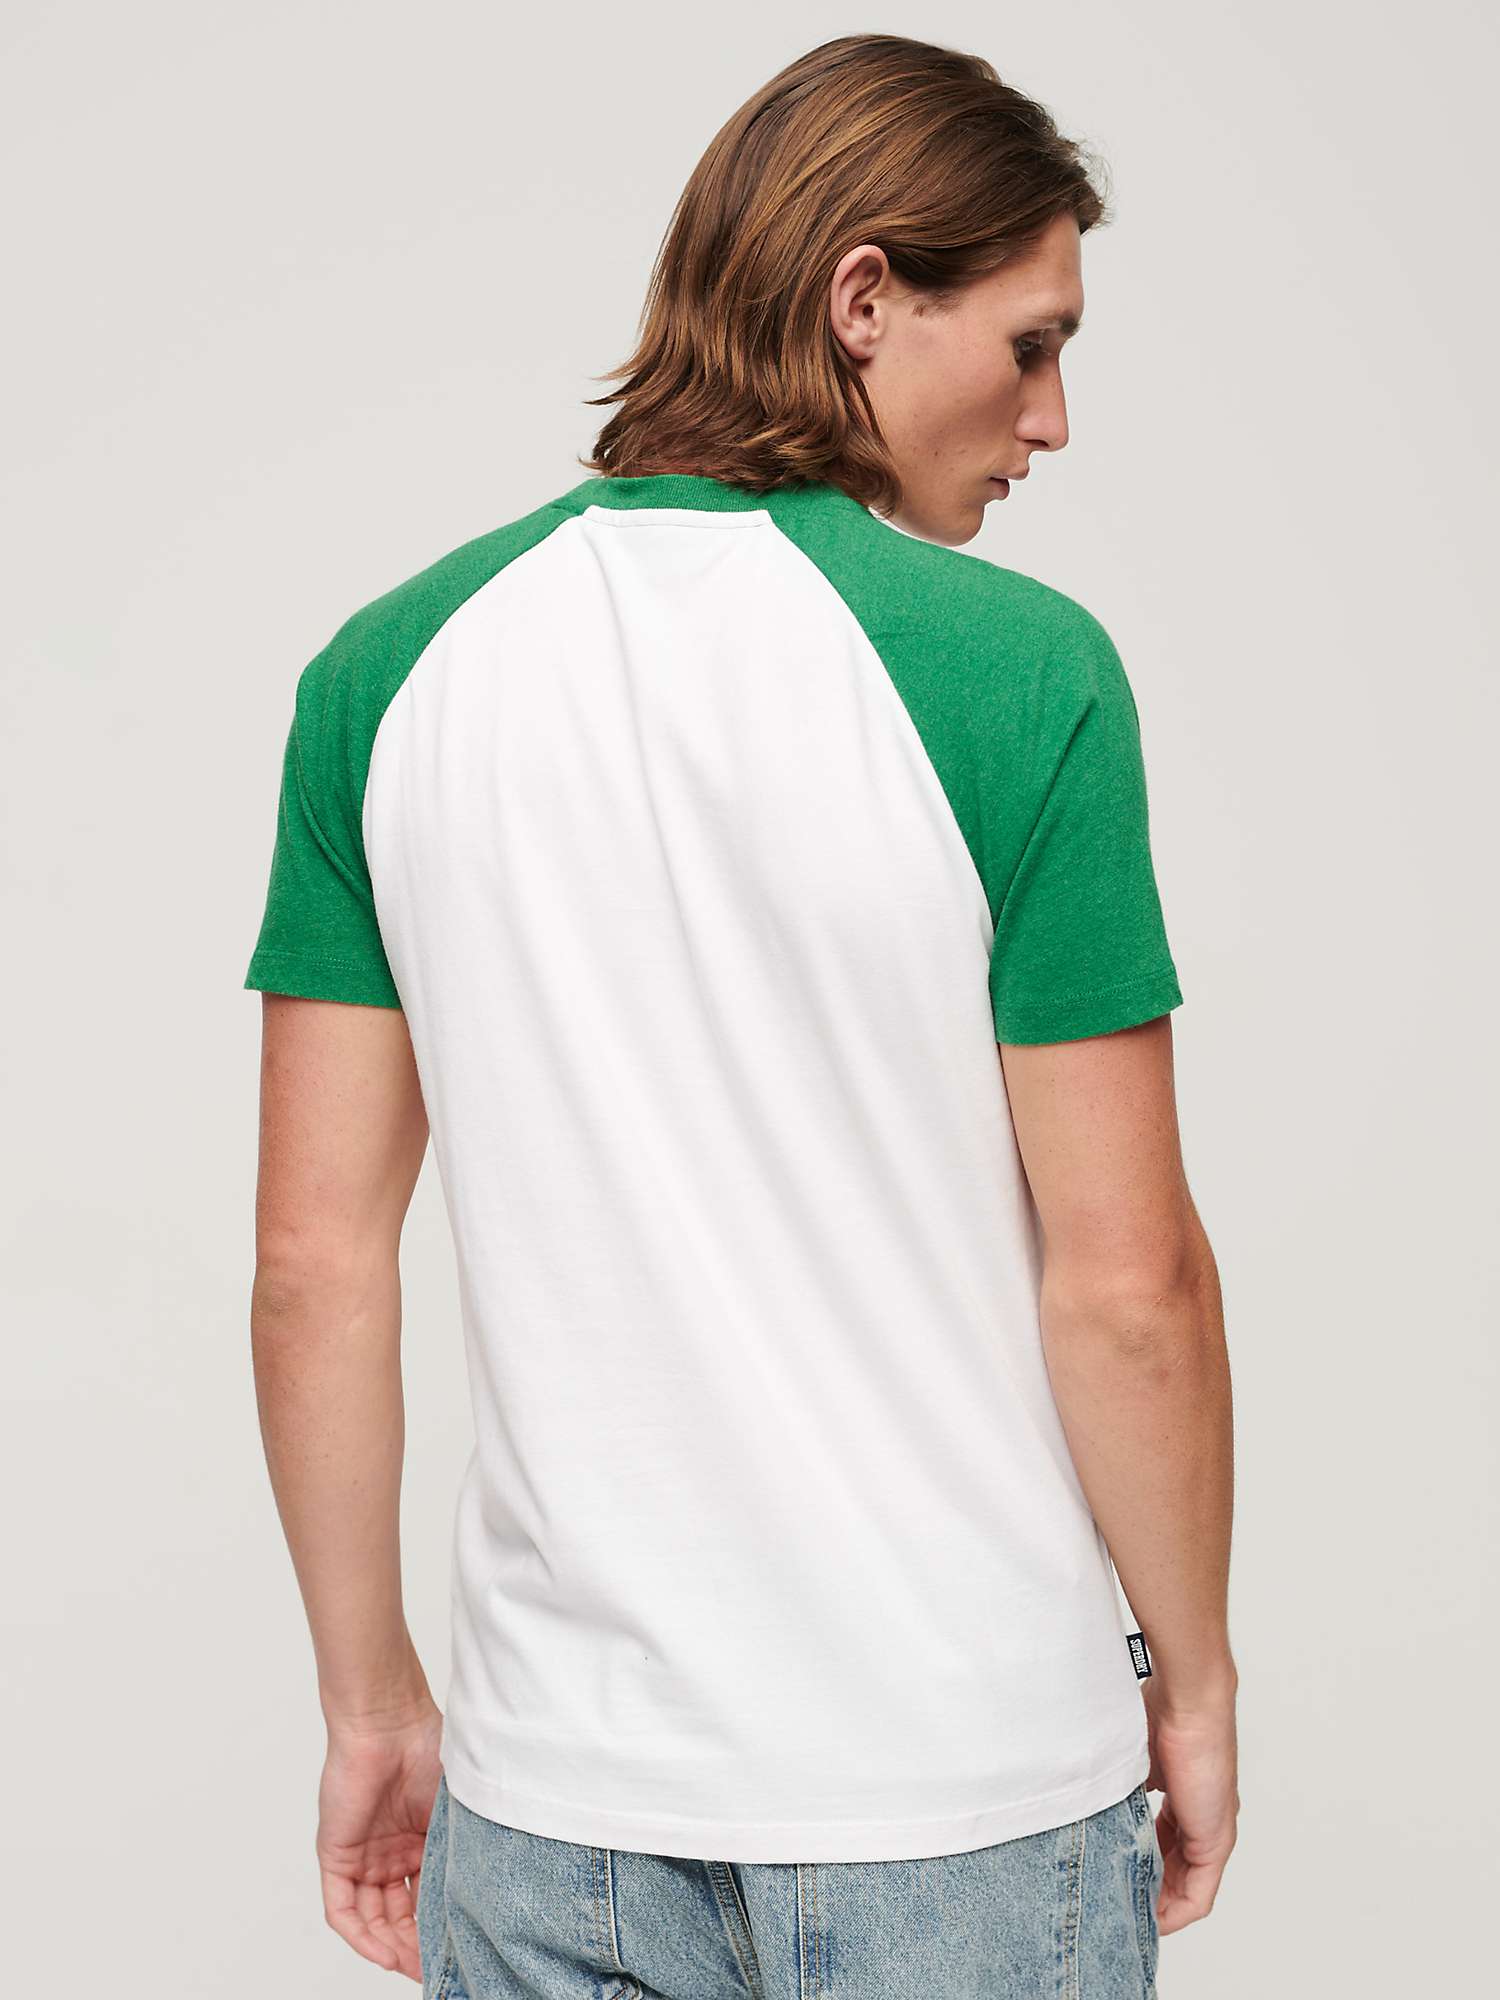 Buy Superdry Organic Cotton Essential Logo Baseball T-Shirt Online at johnlewis.com